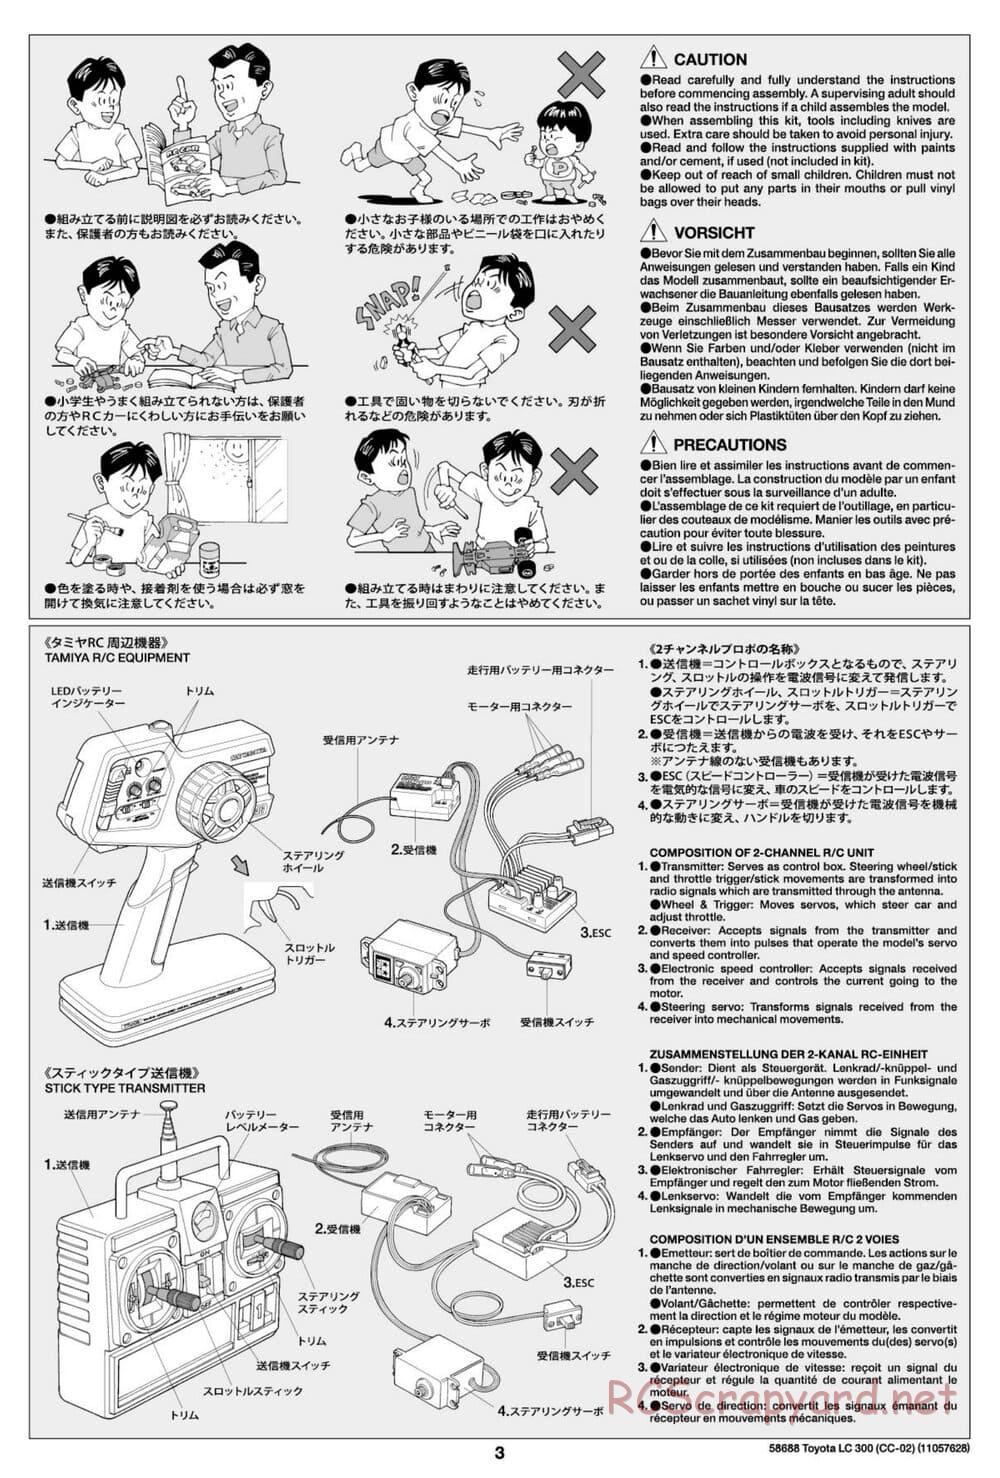 Tamiya - Toyota Land Cruiser 300 - CC-02 Chassis - Manual - Page 3